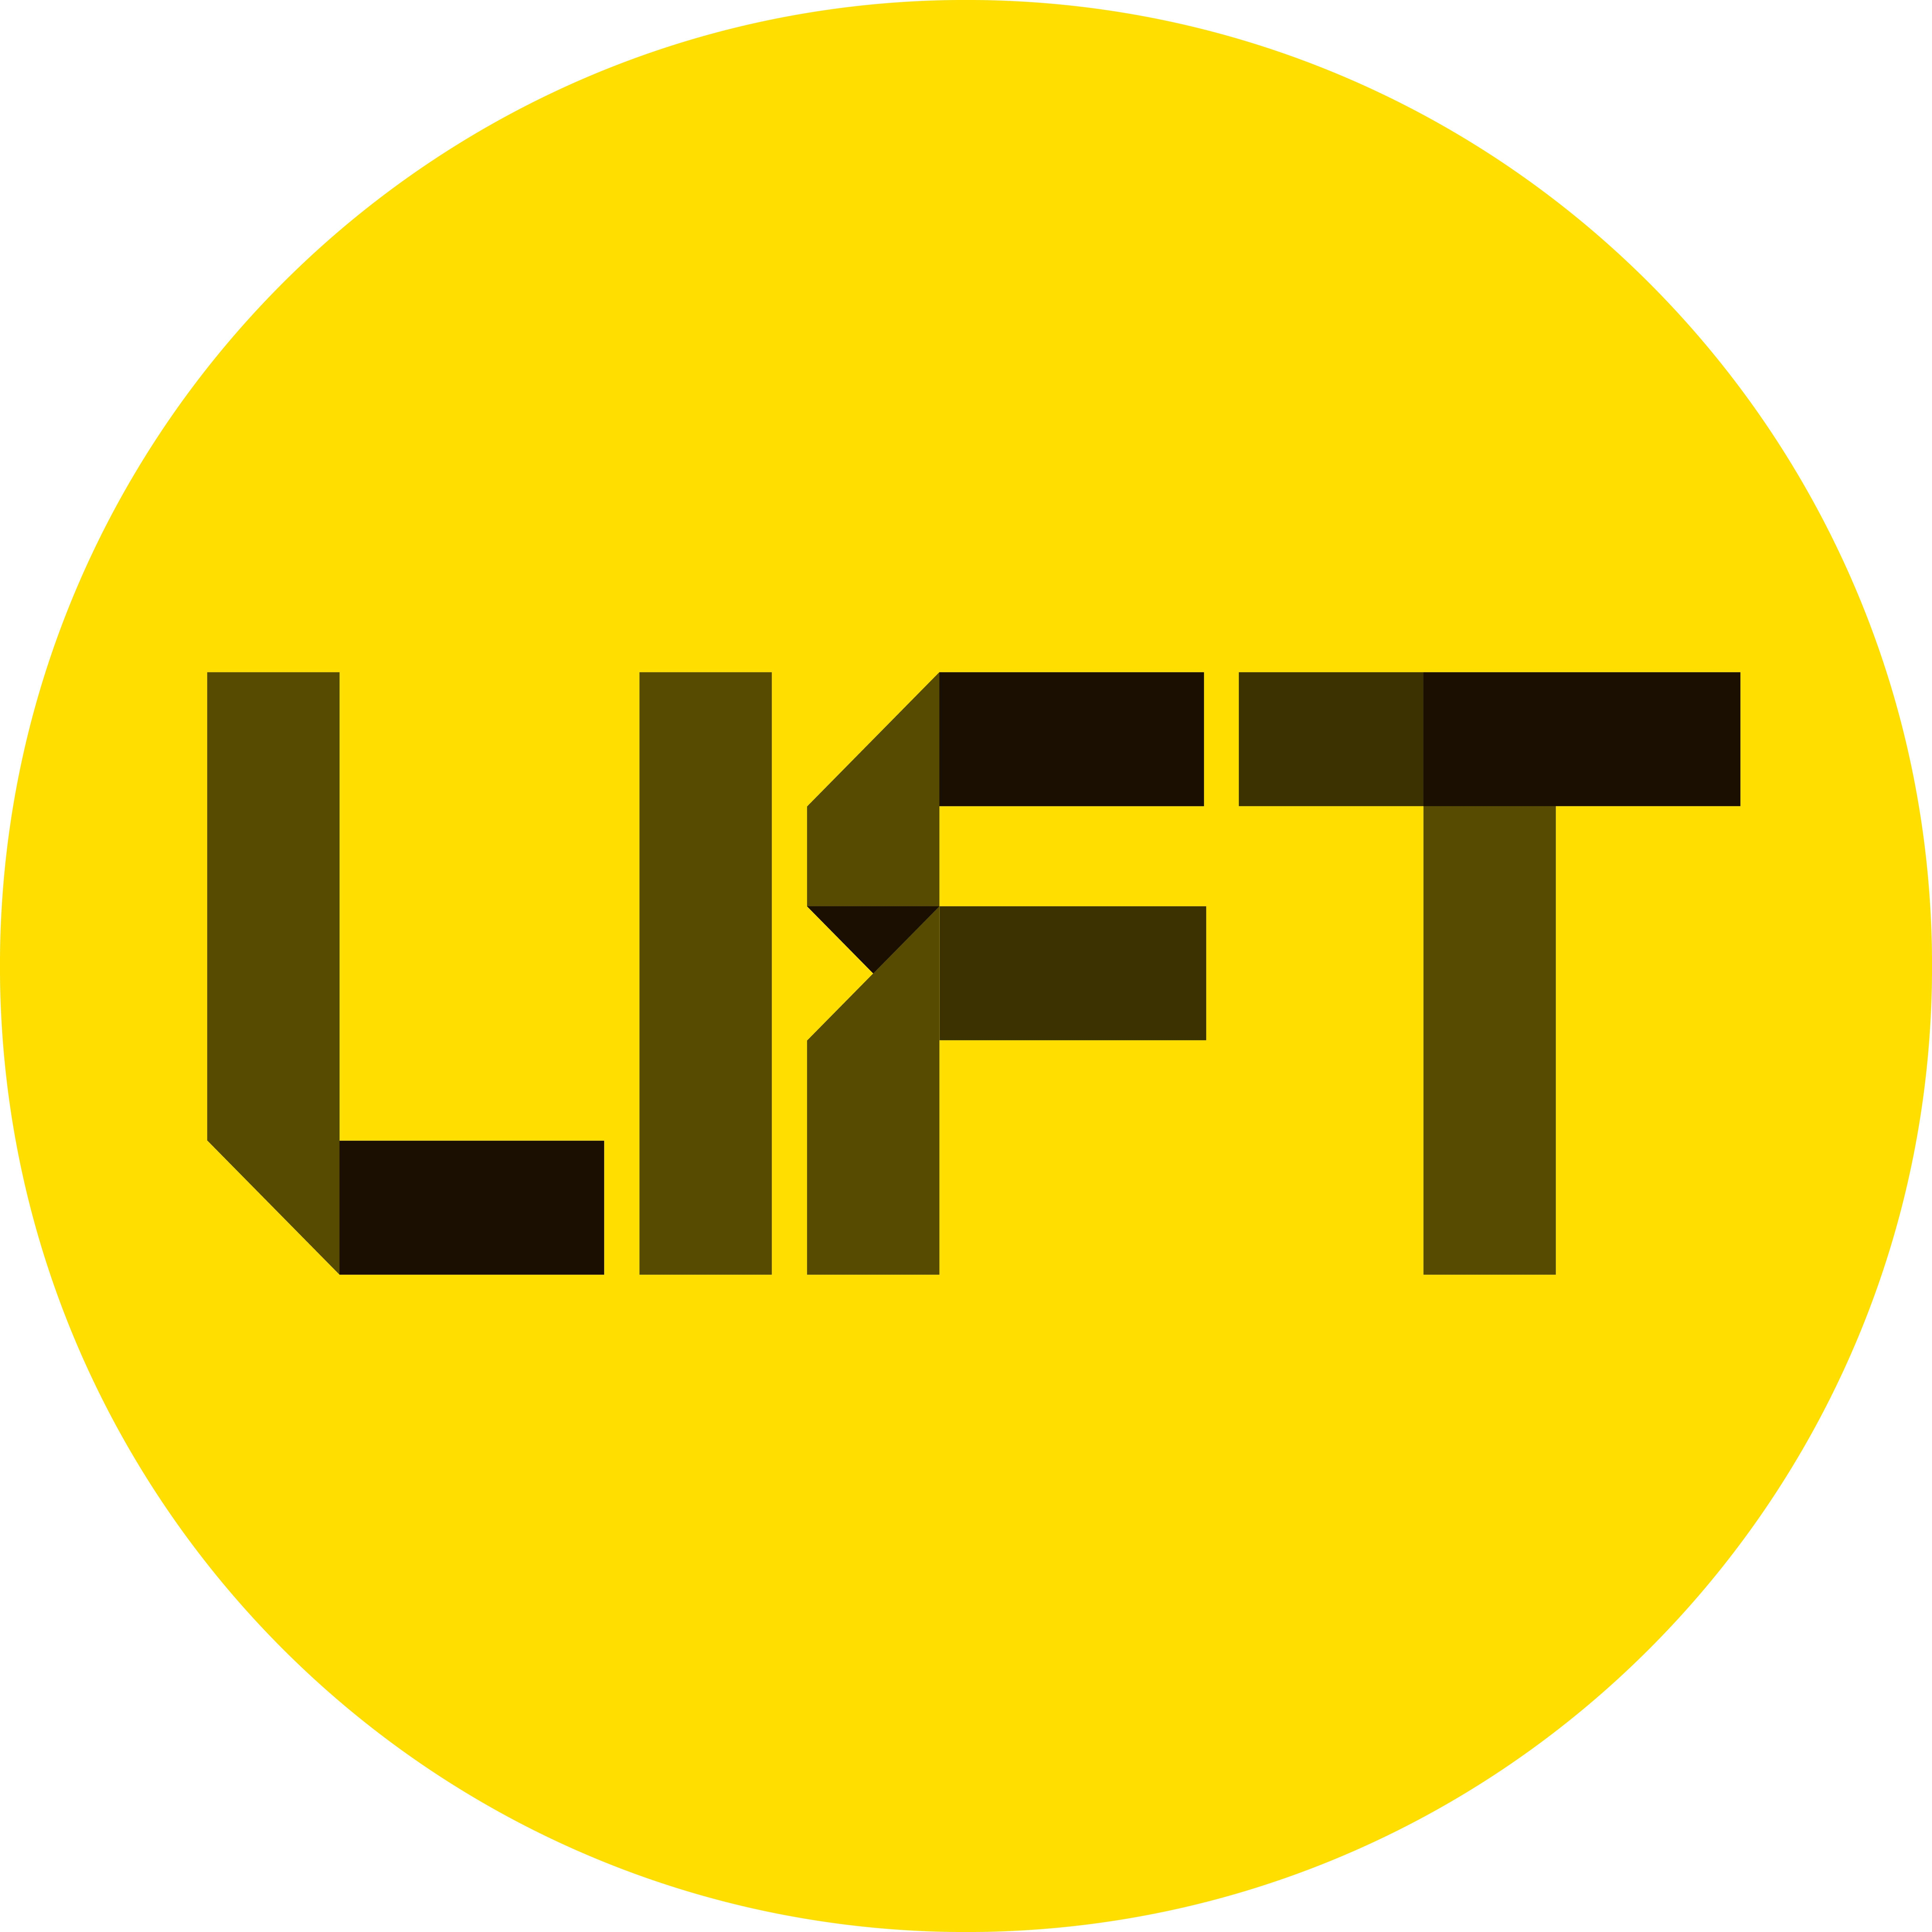 Lift Logo - File:LIFT logo circle.jpg - Wikimedia Commons